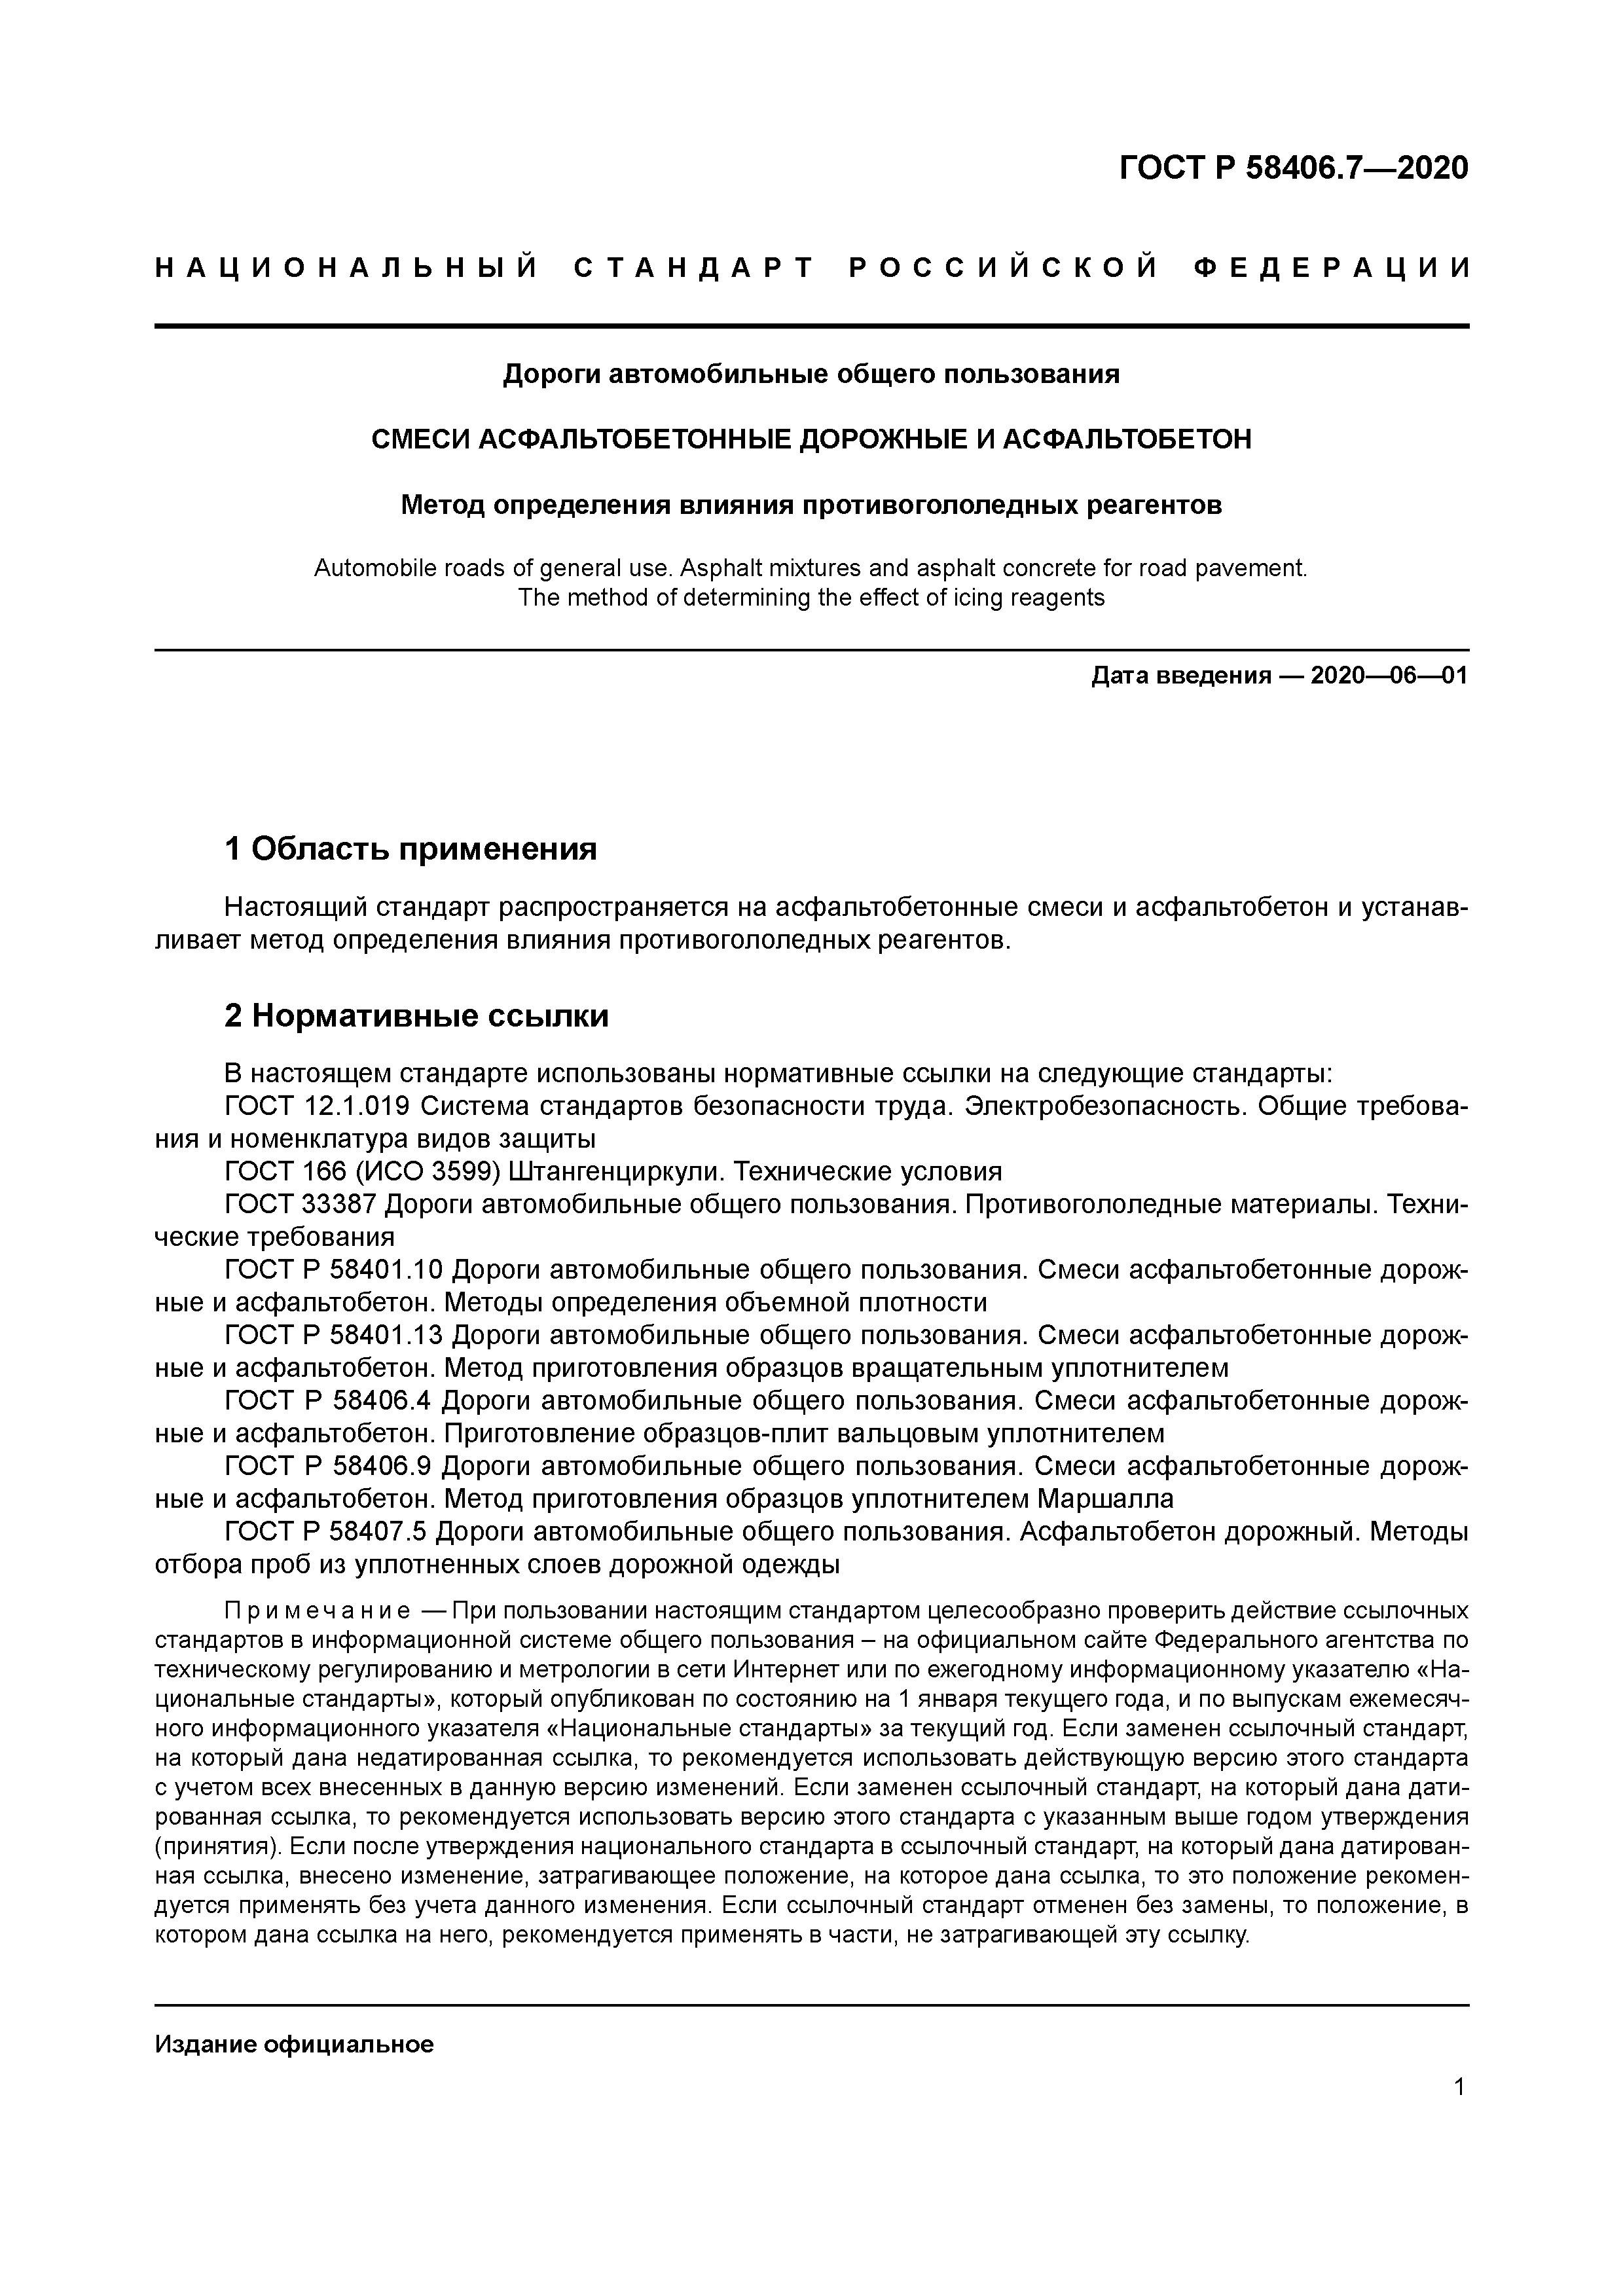 ГОСТ Р 58406.7-2020